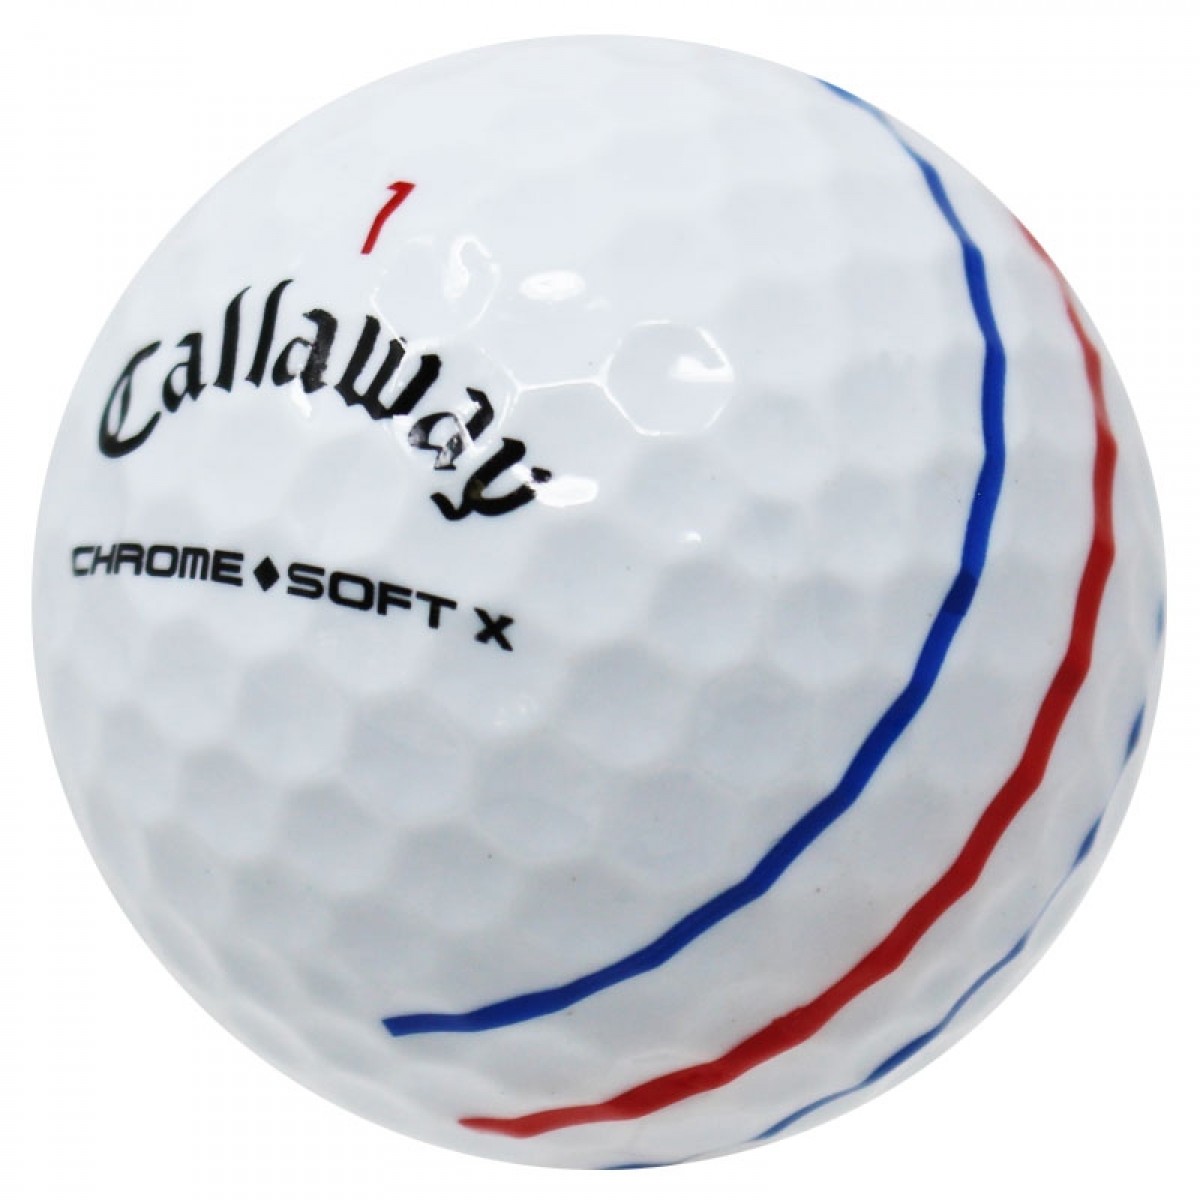 Callaway Chrome Soft X Prototype Ball Tour Players | PGAClubTracker.com